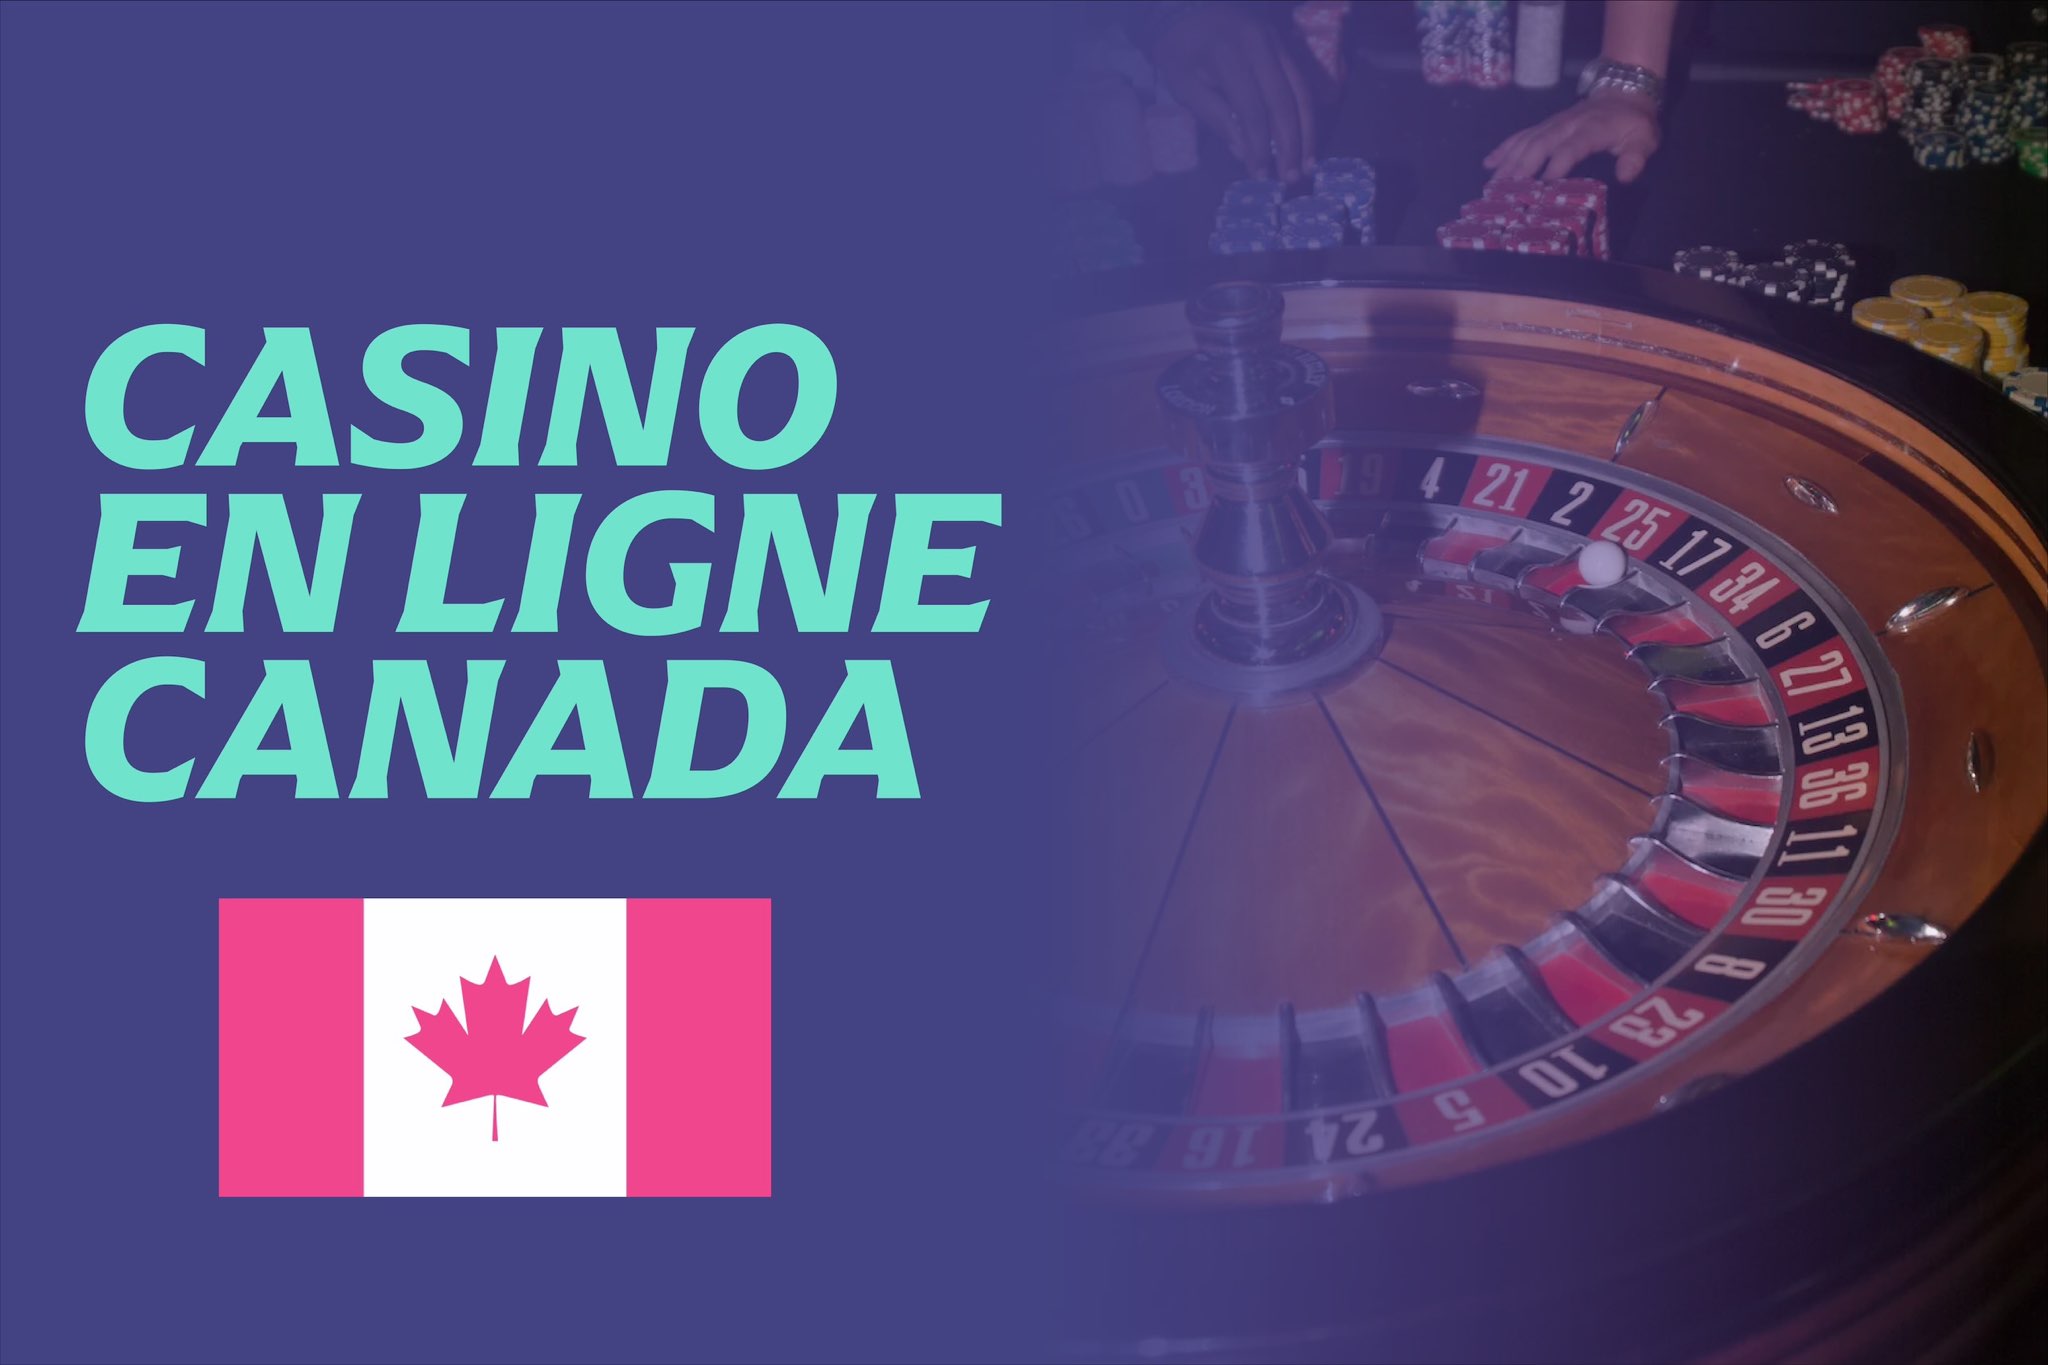 Casino en ligne Canada image